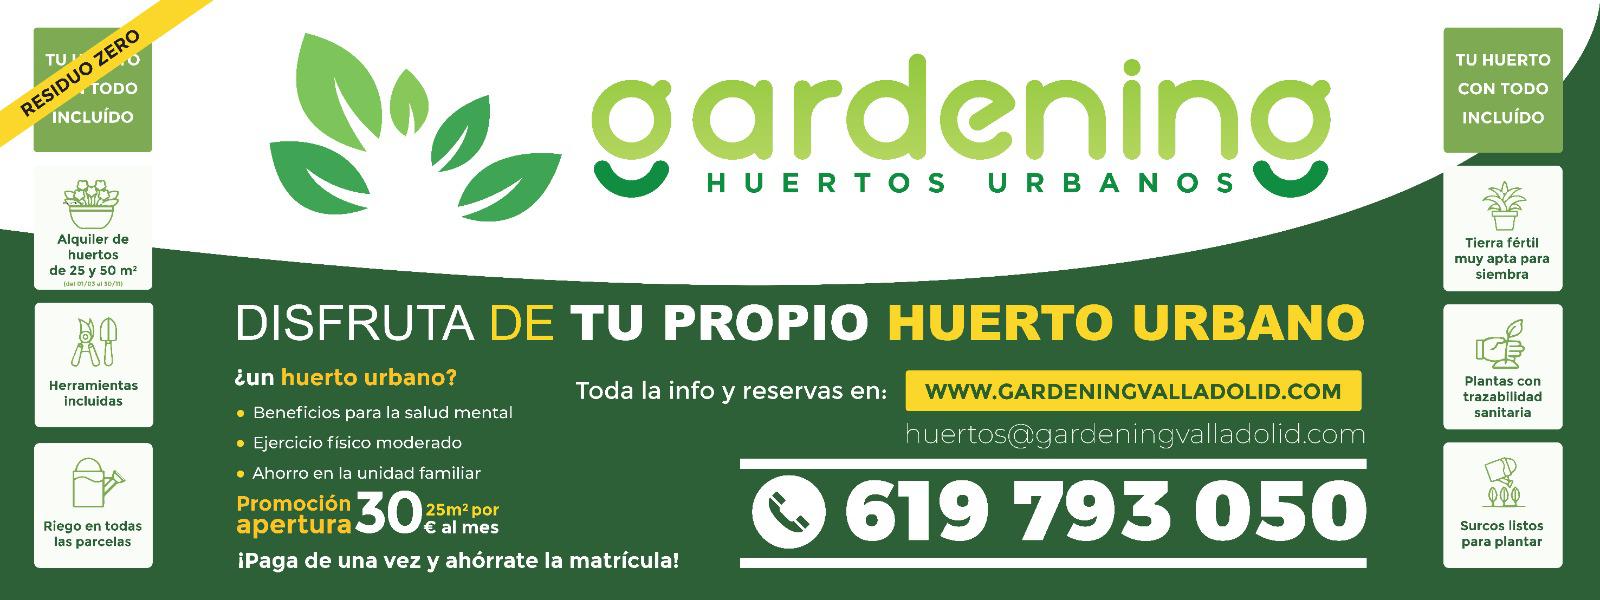 Gardening Valladolid – Huertos Urbanos Valladolid